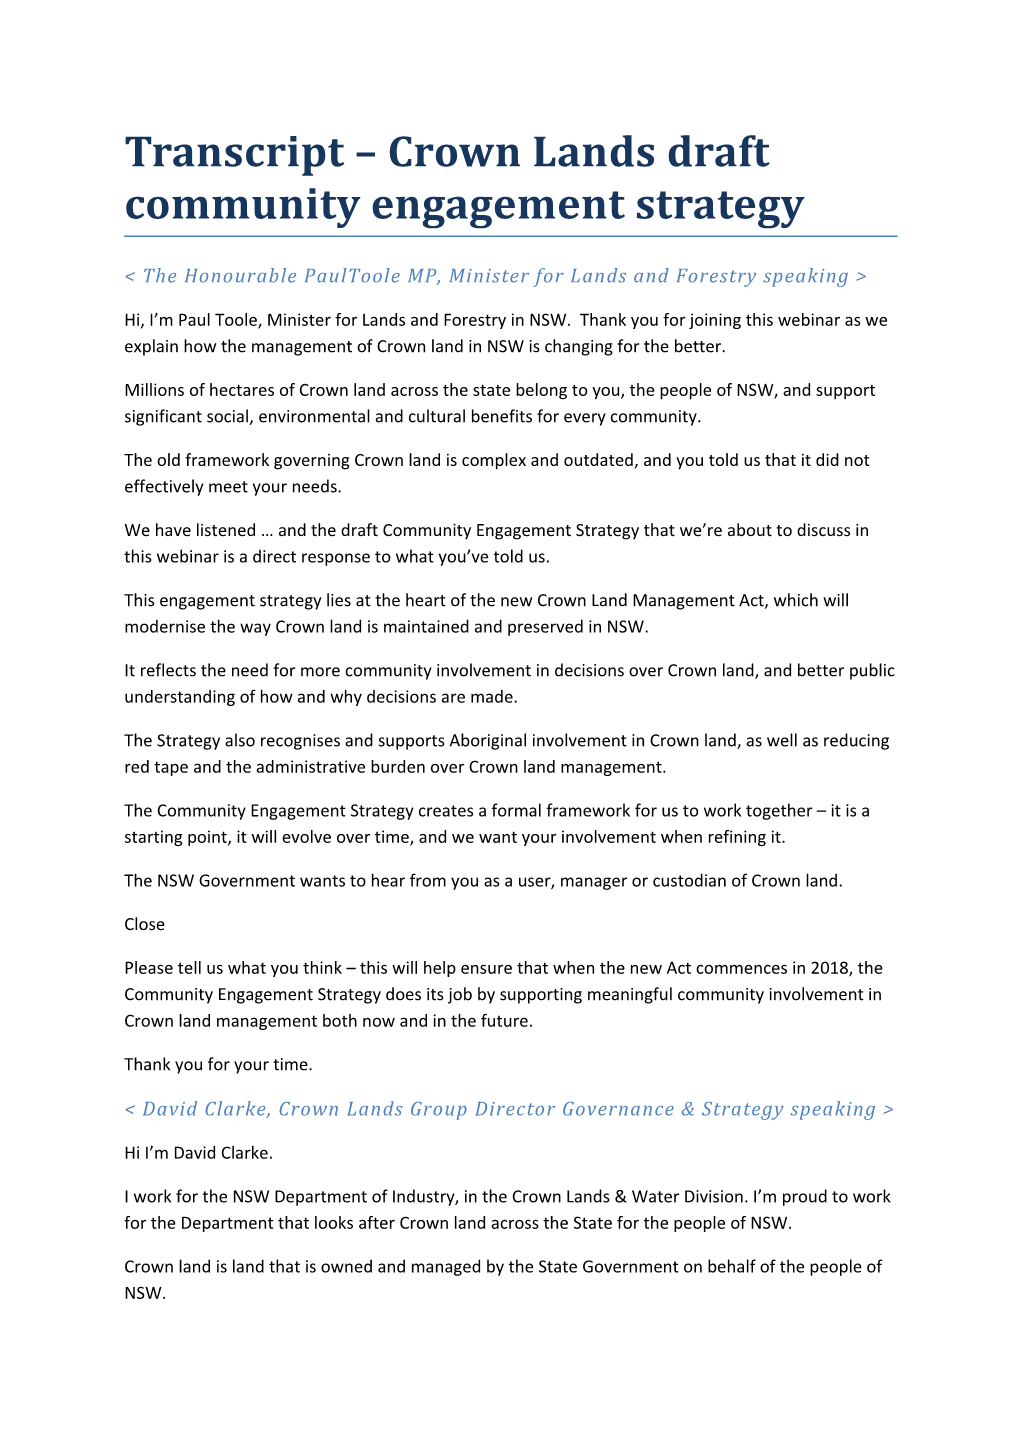 Transcript Crown Lands Draft Community Engagement Strategy